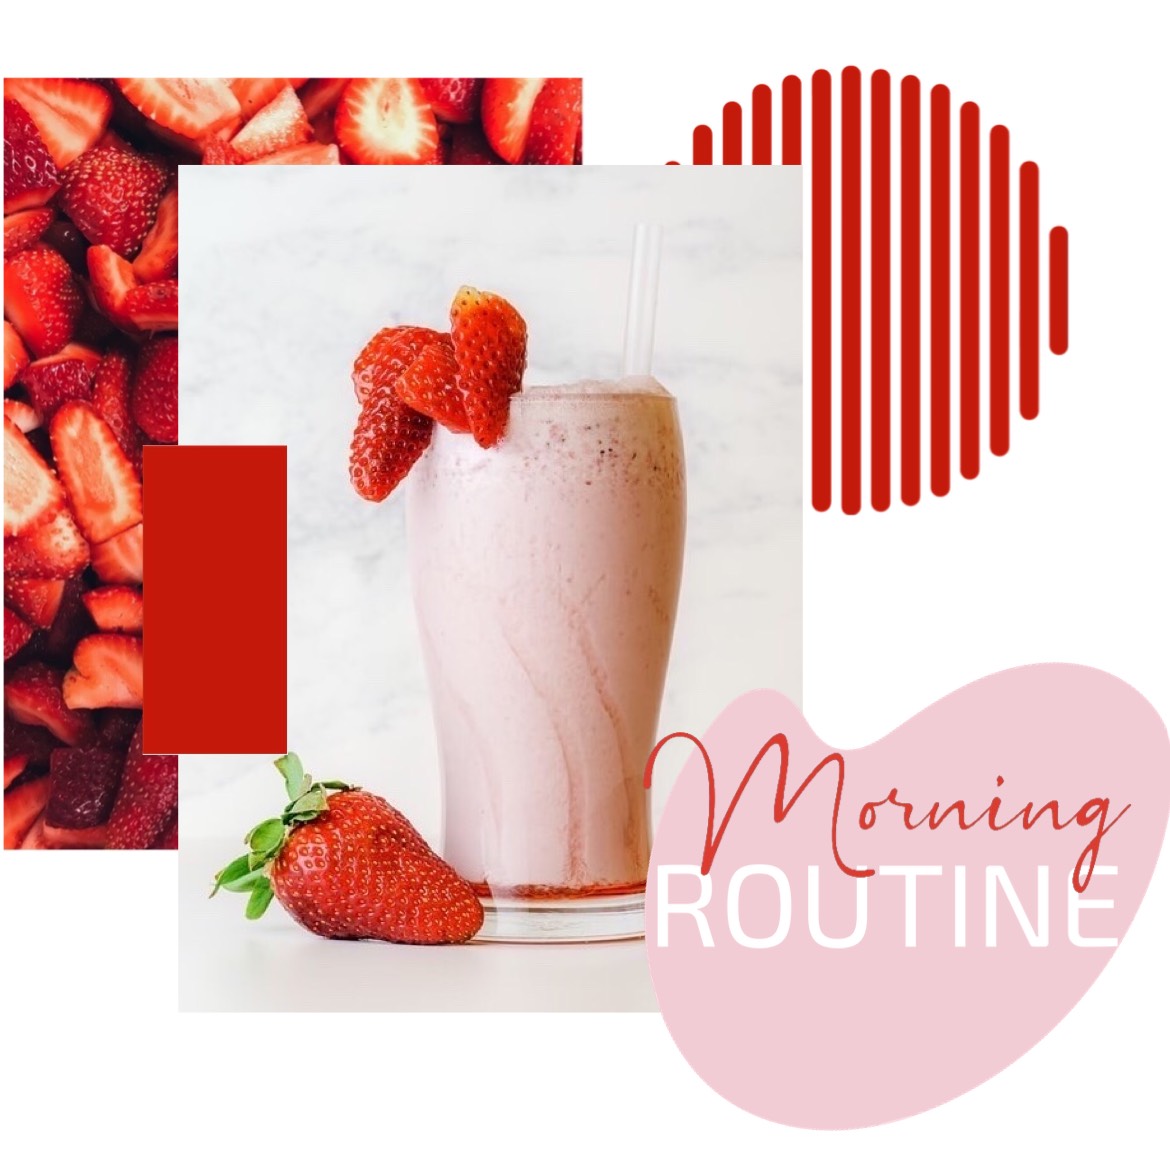 Breakfast smoothie routine cool instagram post template